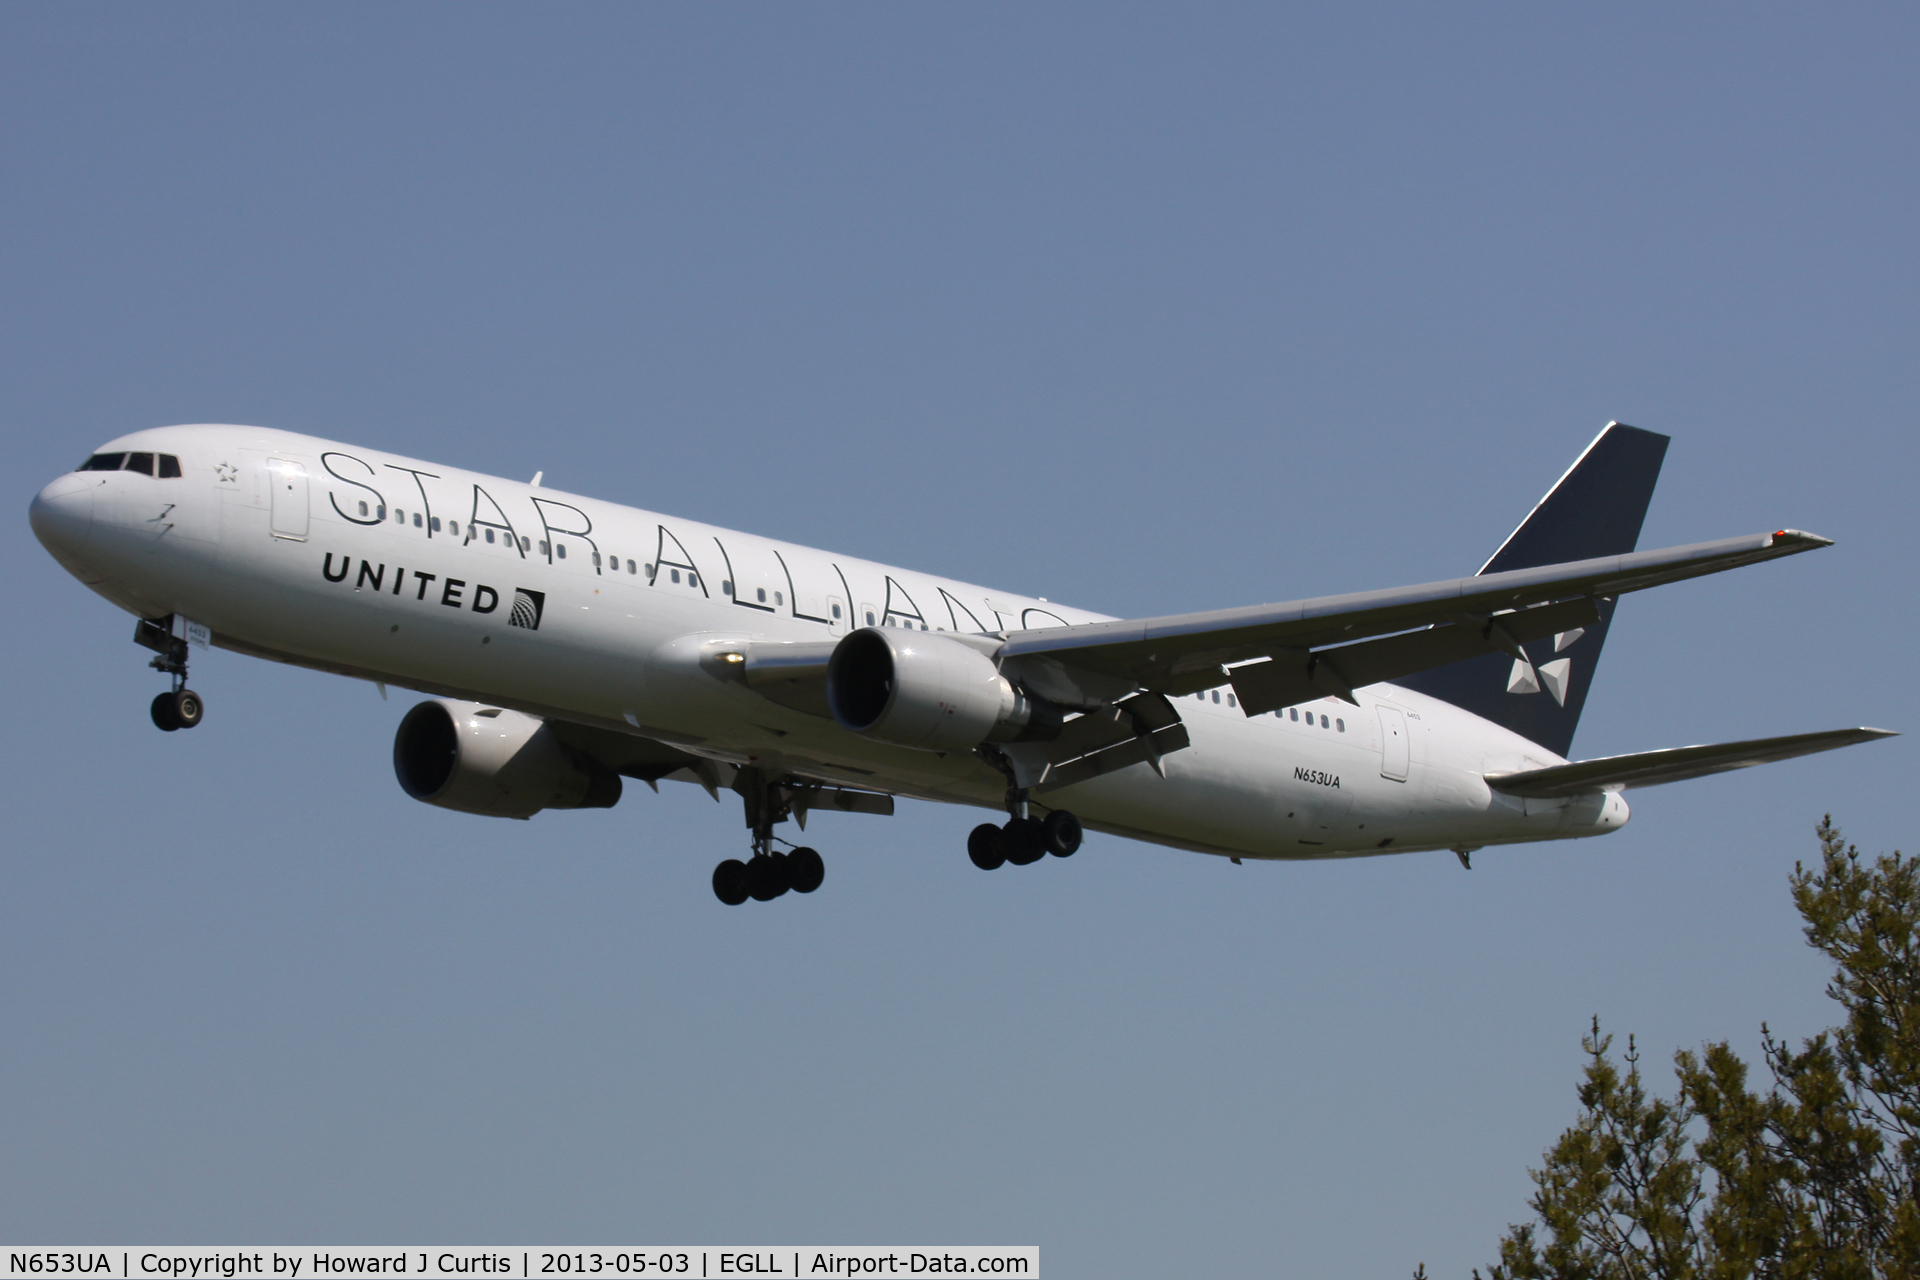 N653UA, 1992 Boeing 767-322 C/N 25391, United Airlines, on approach to runway 27L.